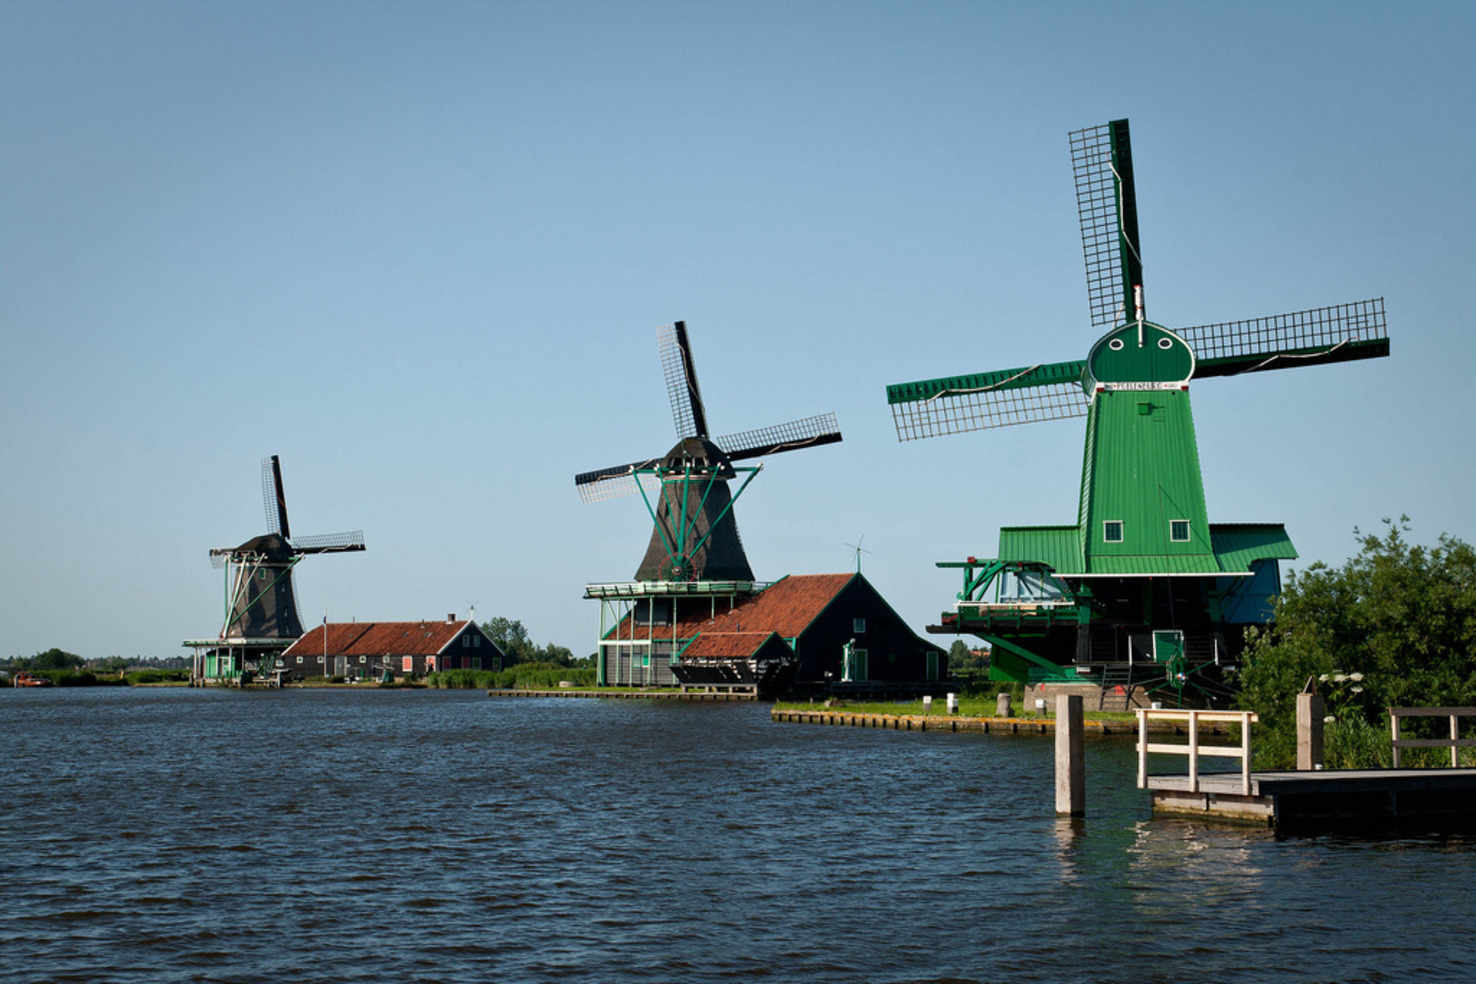 Large windmills